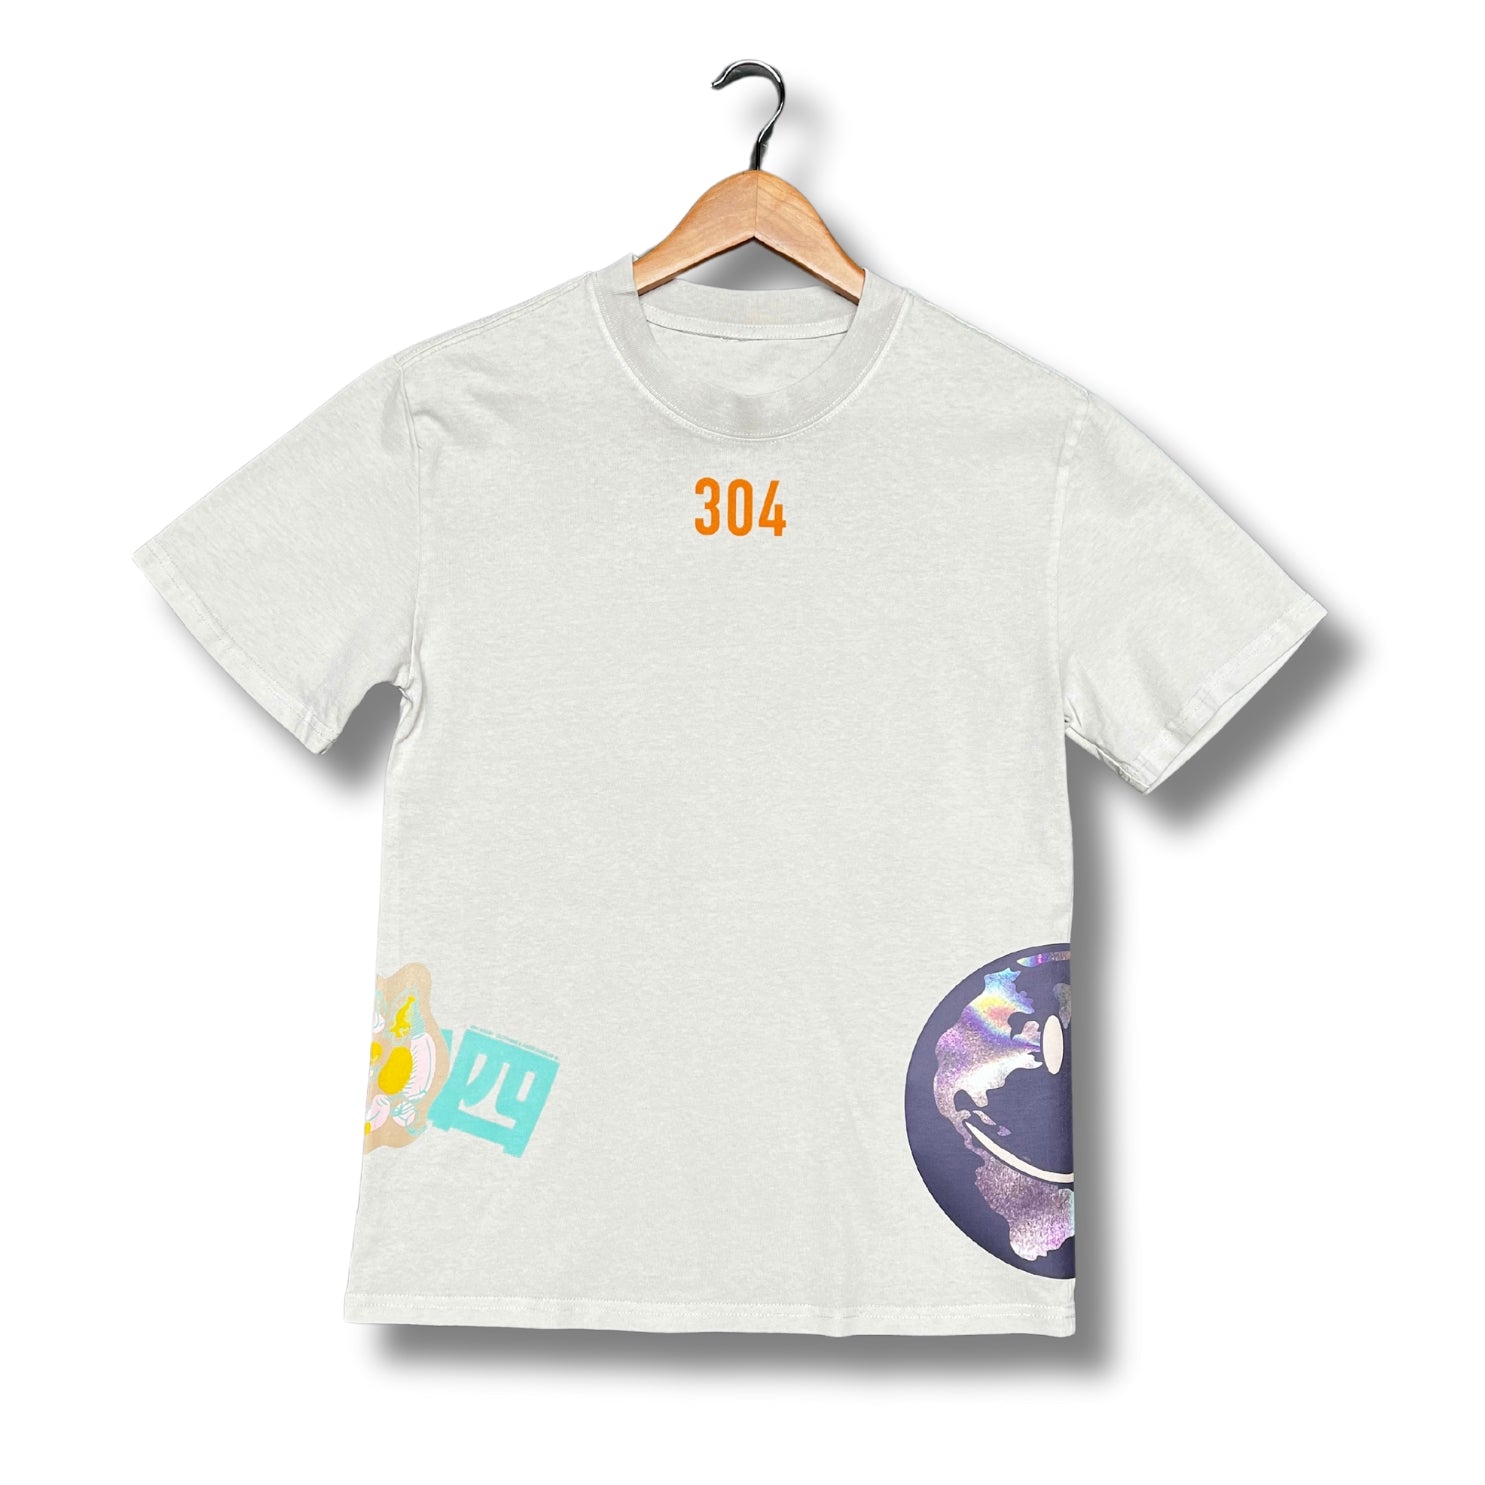 304 Dan T-Shirt Bone